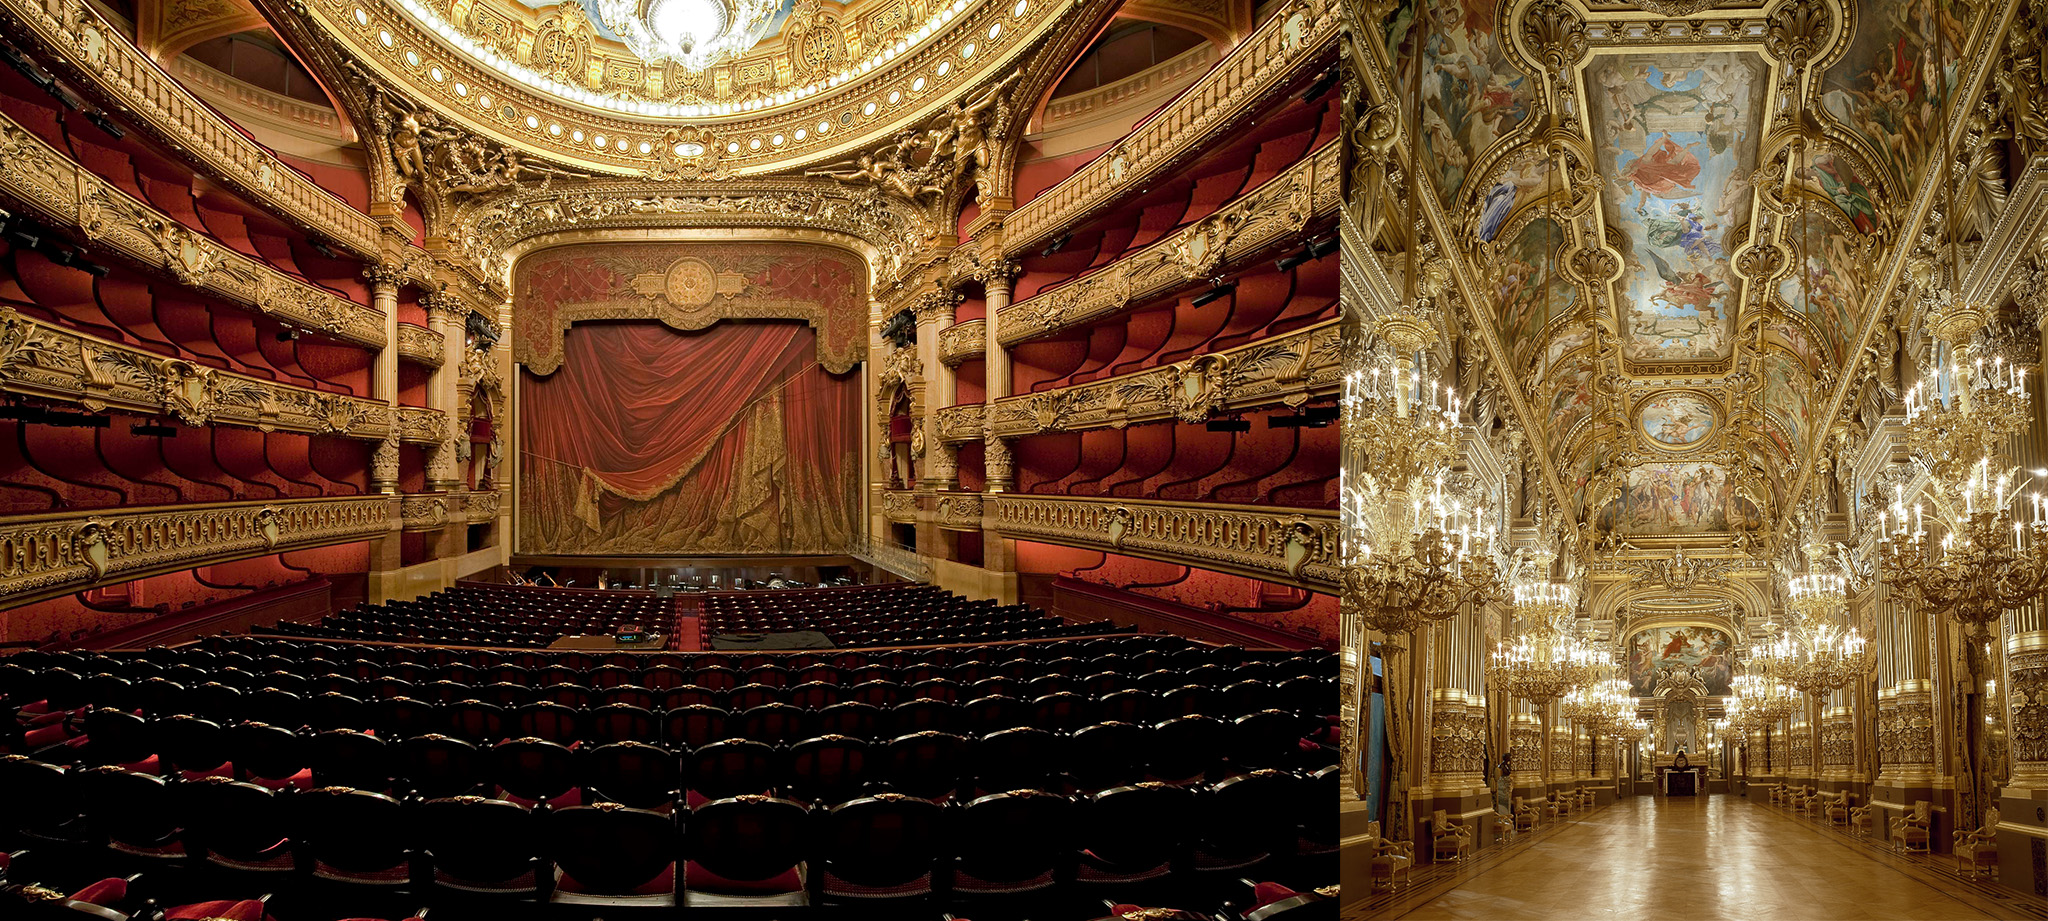 photos of the palais garnier opera and palais garnier halls